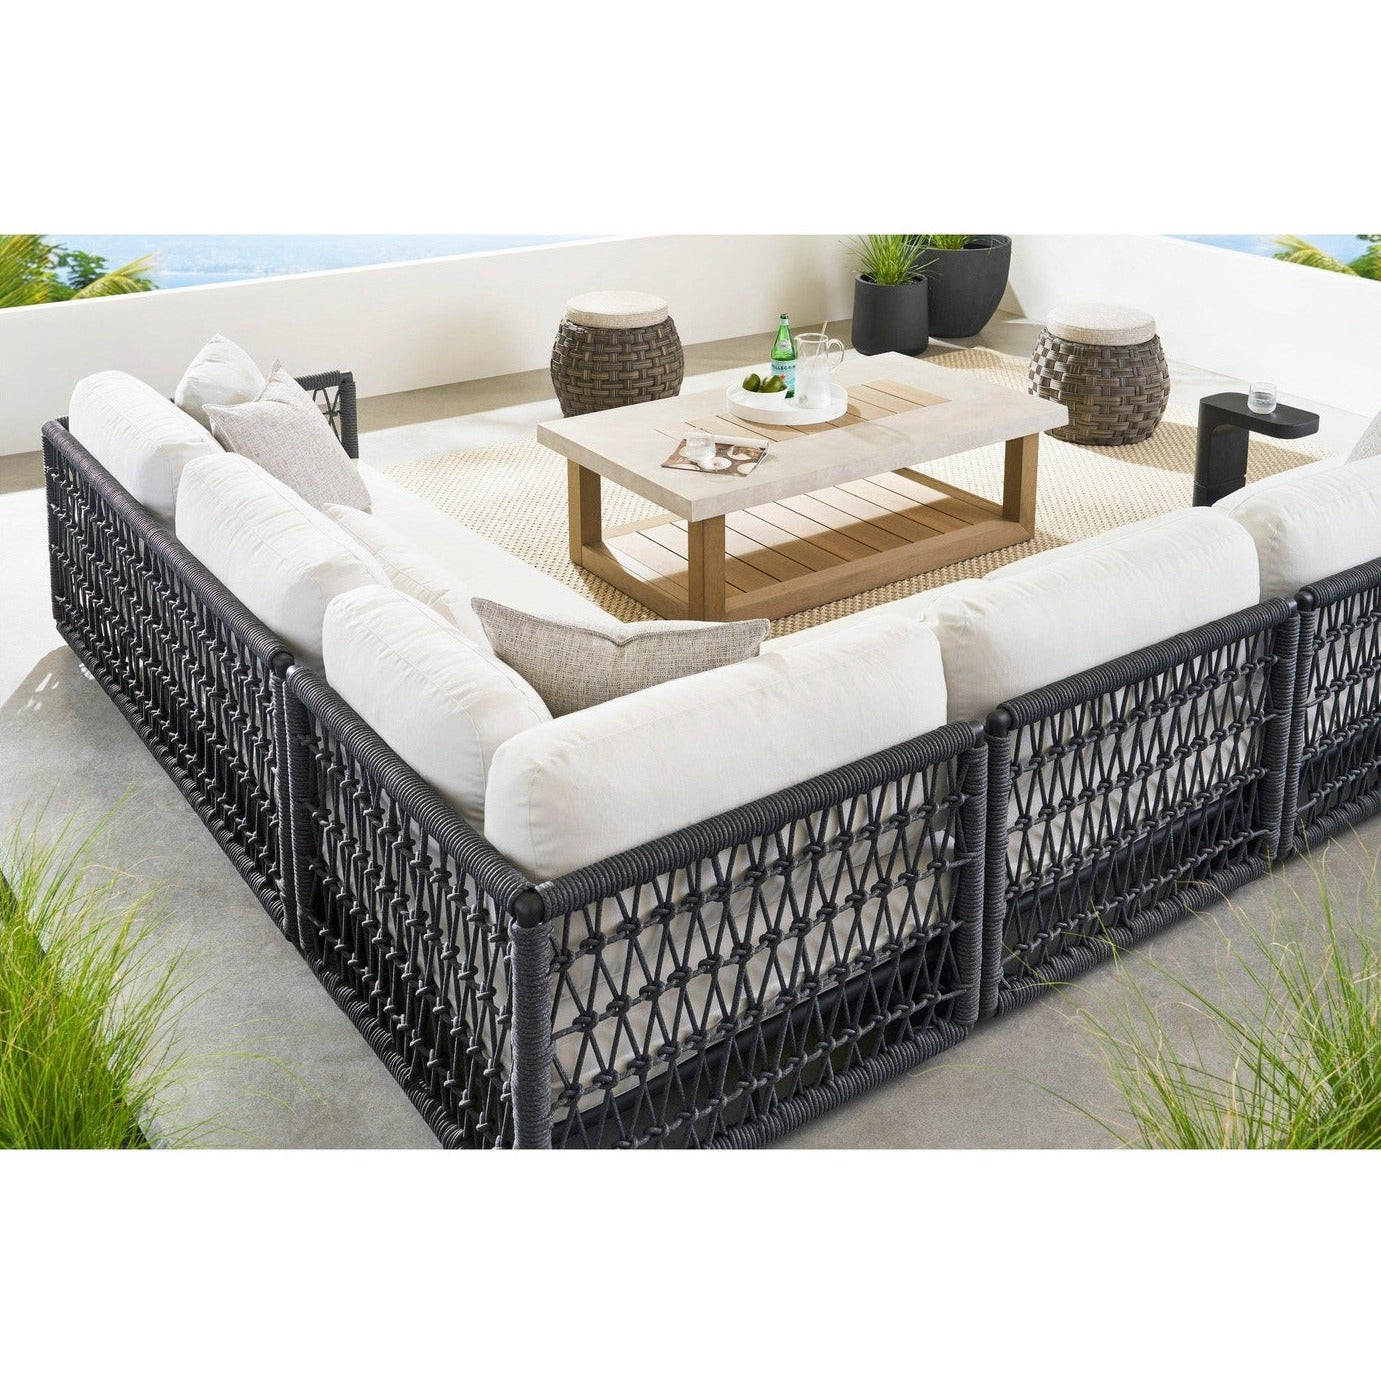 Vanguard Cedargrove Outdoor Sofa